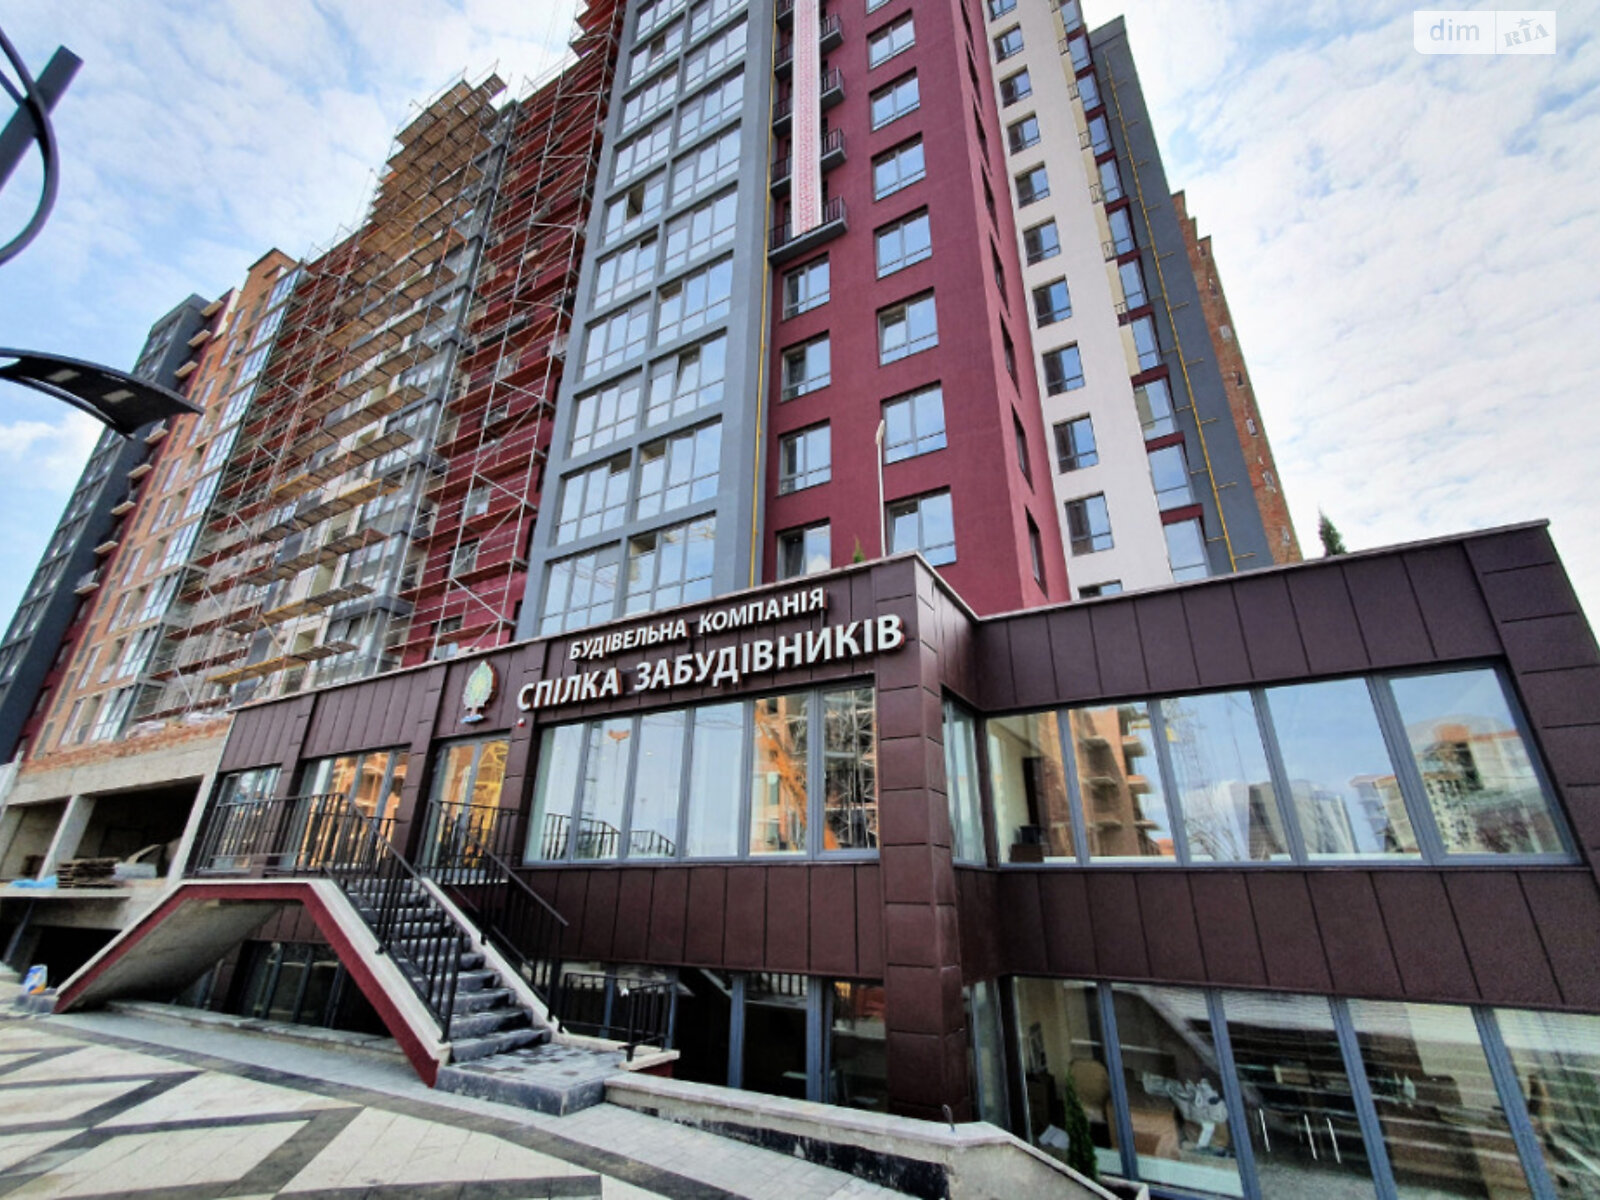 Продажа двухкомнатной квартиры в Ивано-Франковске, на ул. Княгинин 44 корпус 21, район Набережная Княгинин фото 1